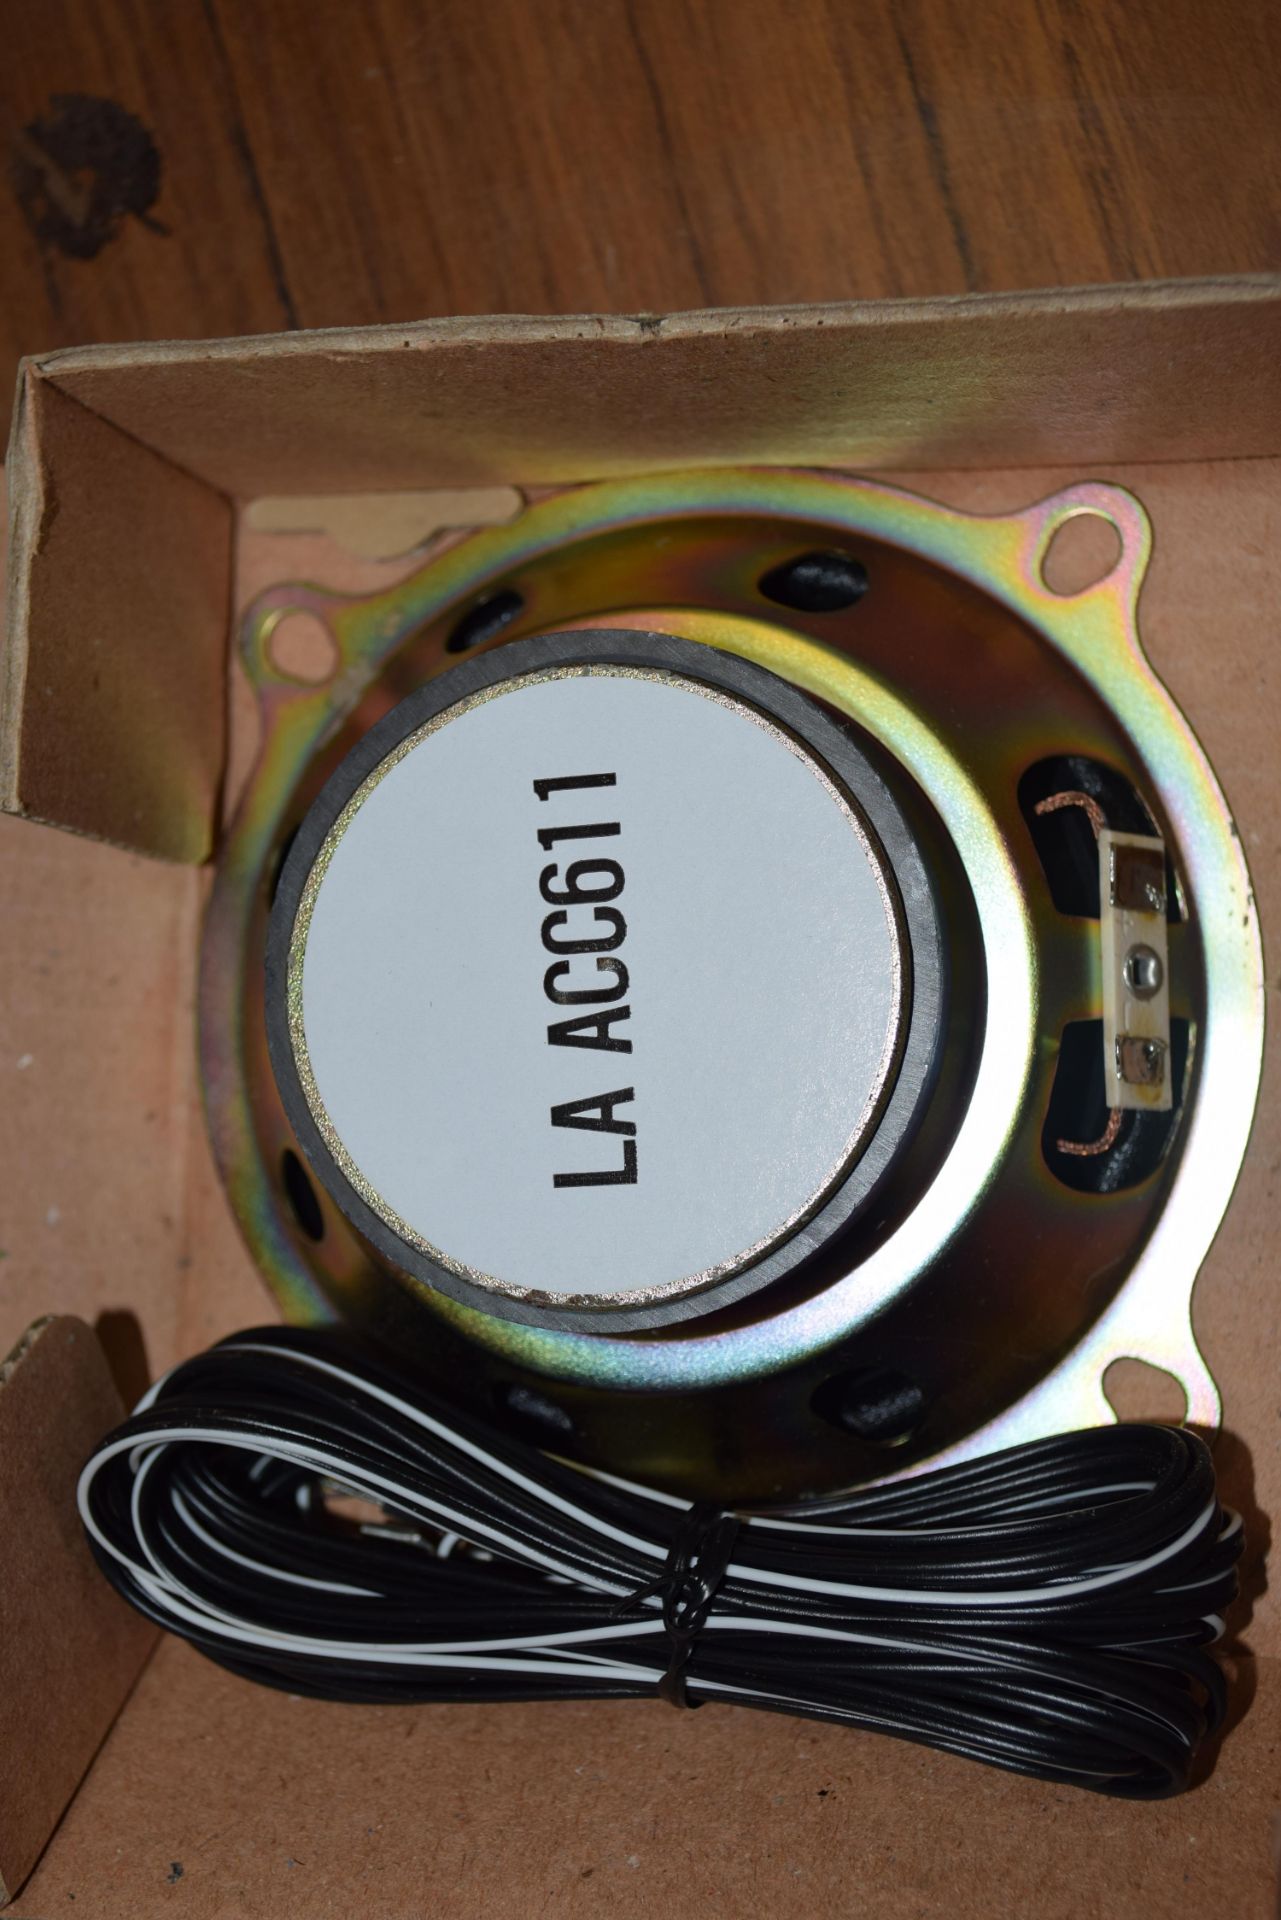 10 BOXED PHOENIX AUDIO CAR SPEAKERS, MODEL NO LAACC611 - Image 3 of 4